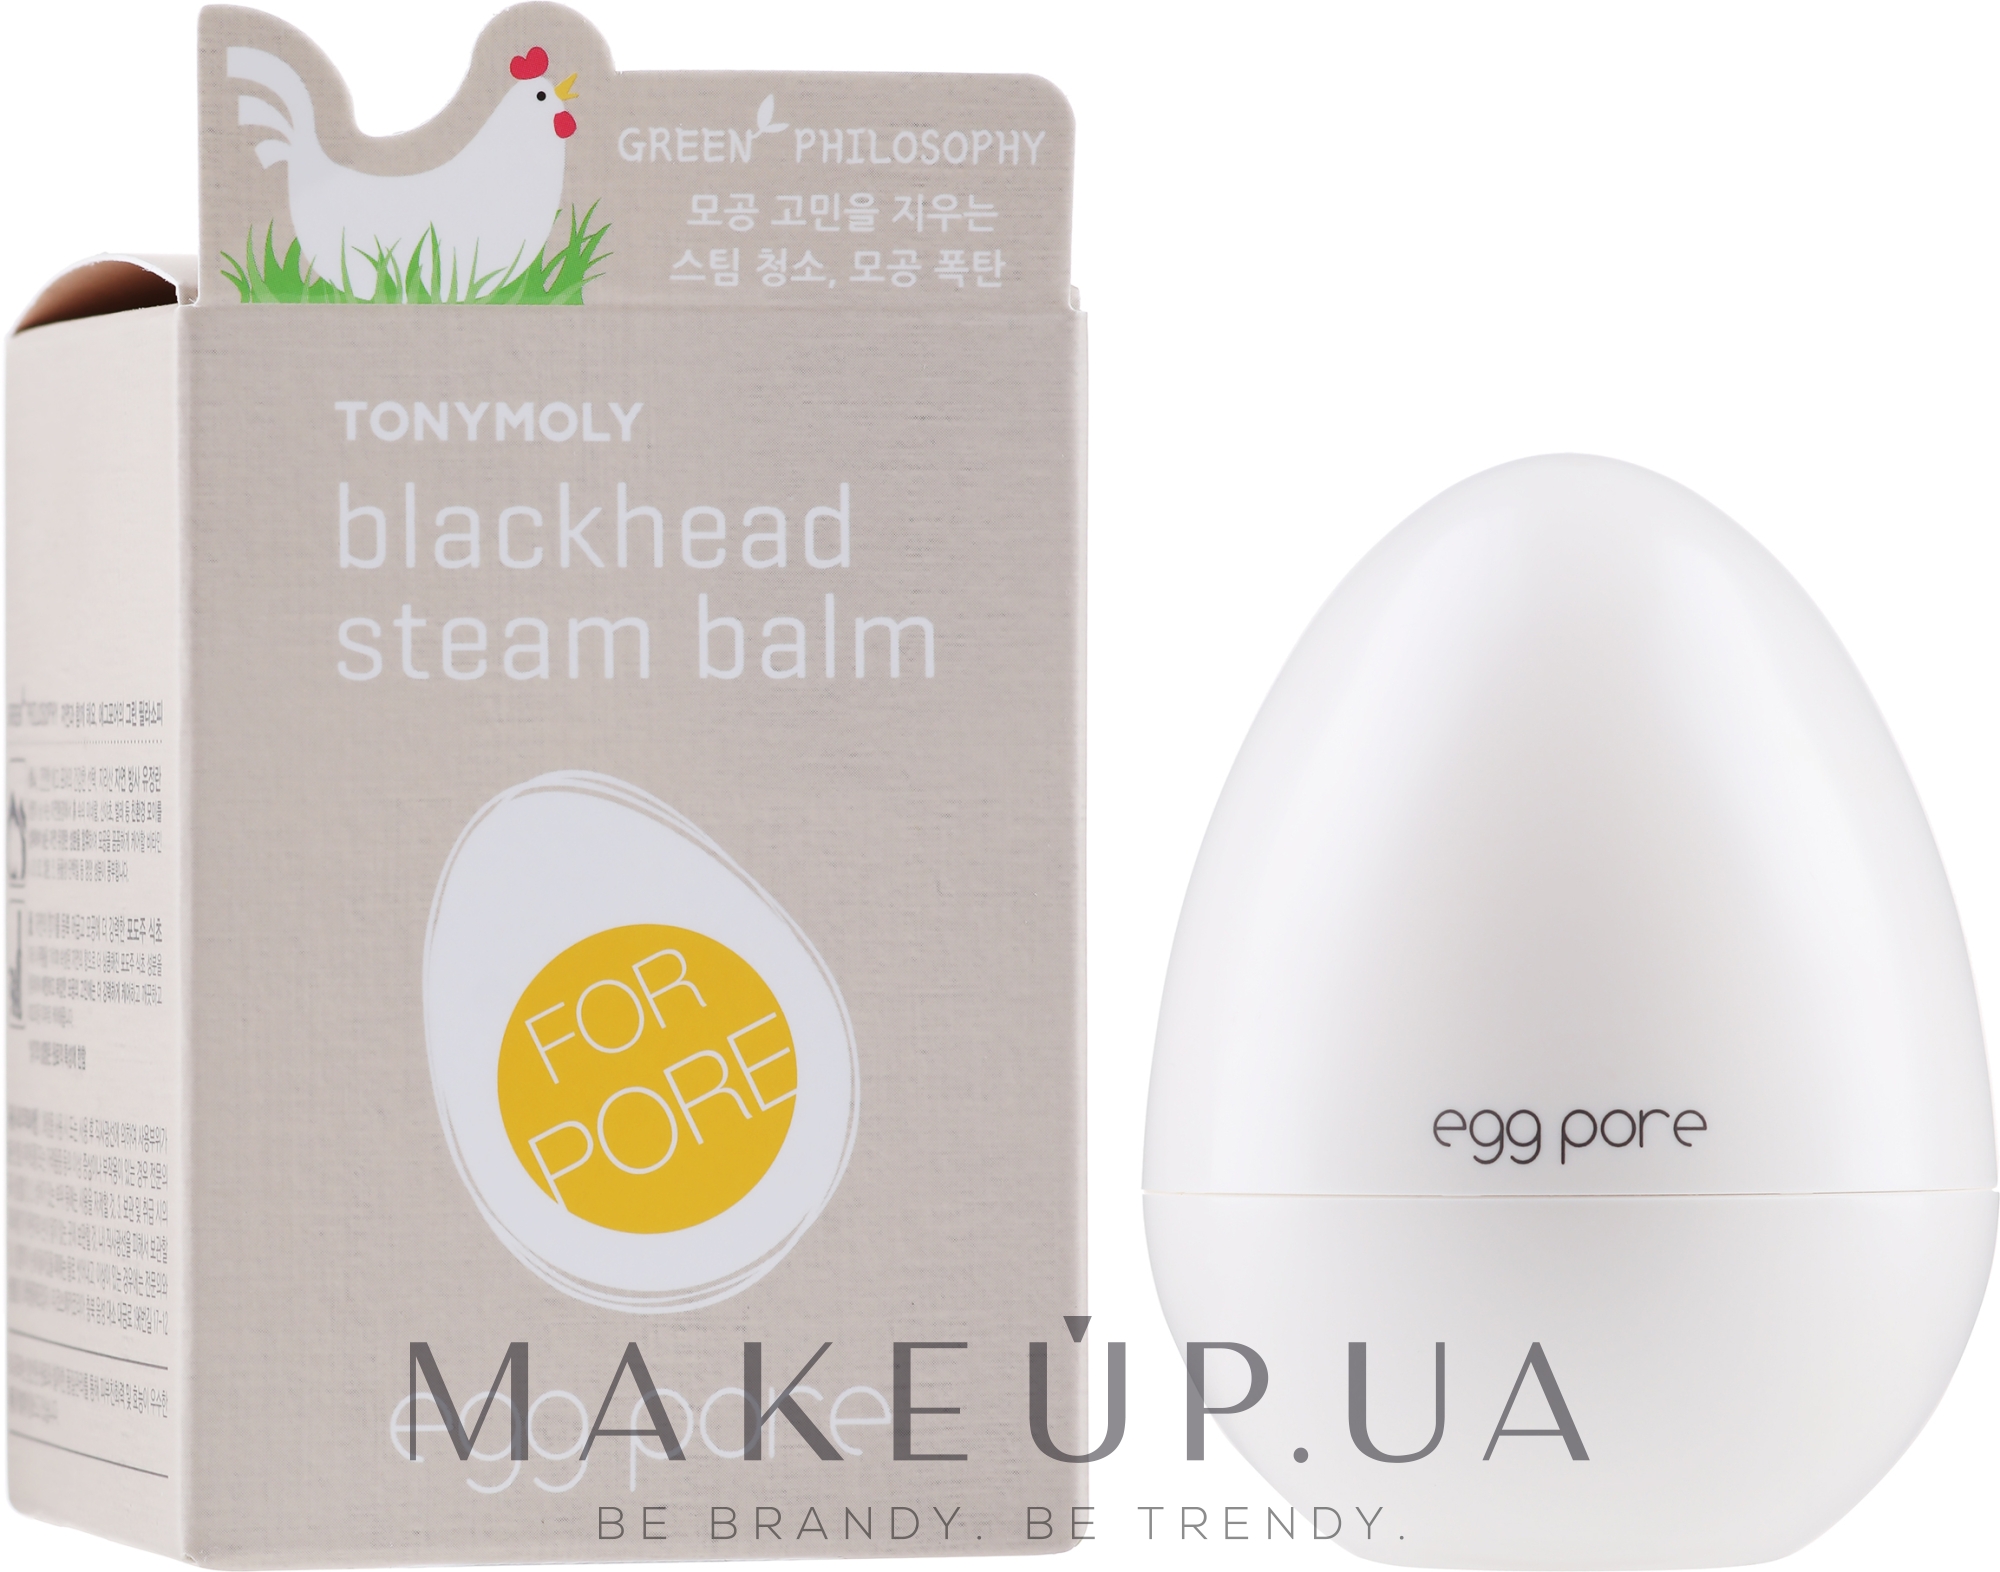 Blackhead steam balm egg pore как пользоваться (120) фото